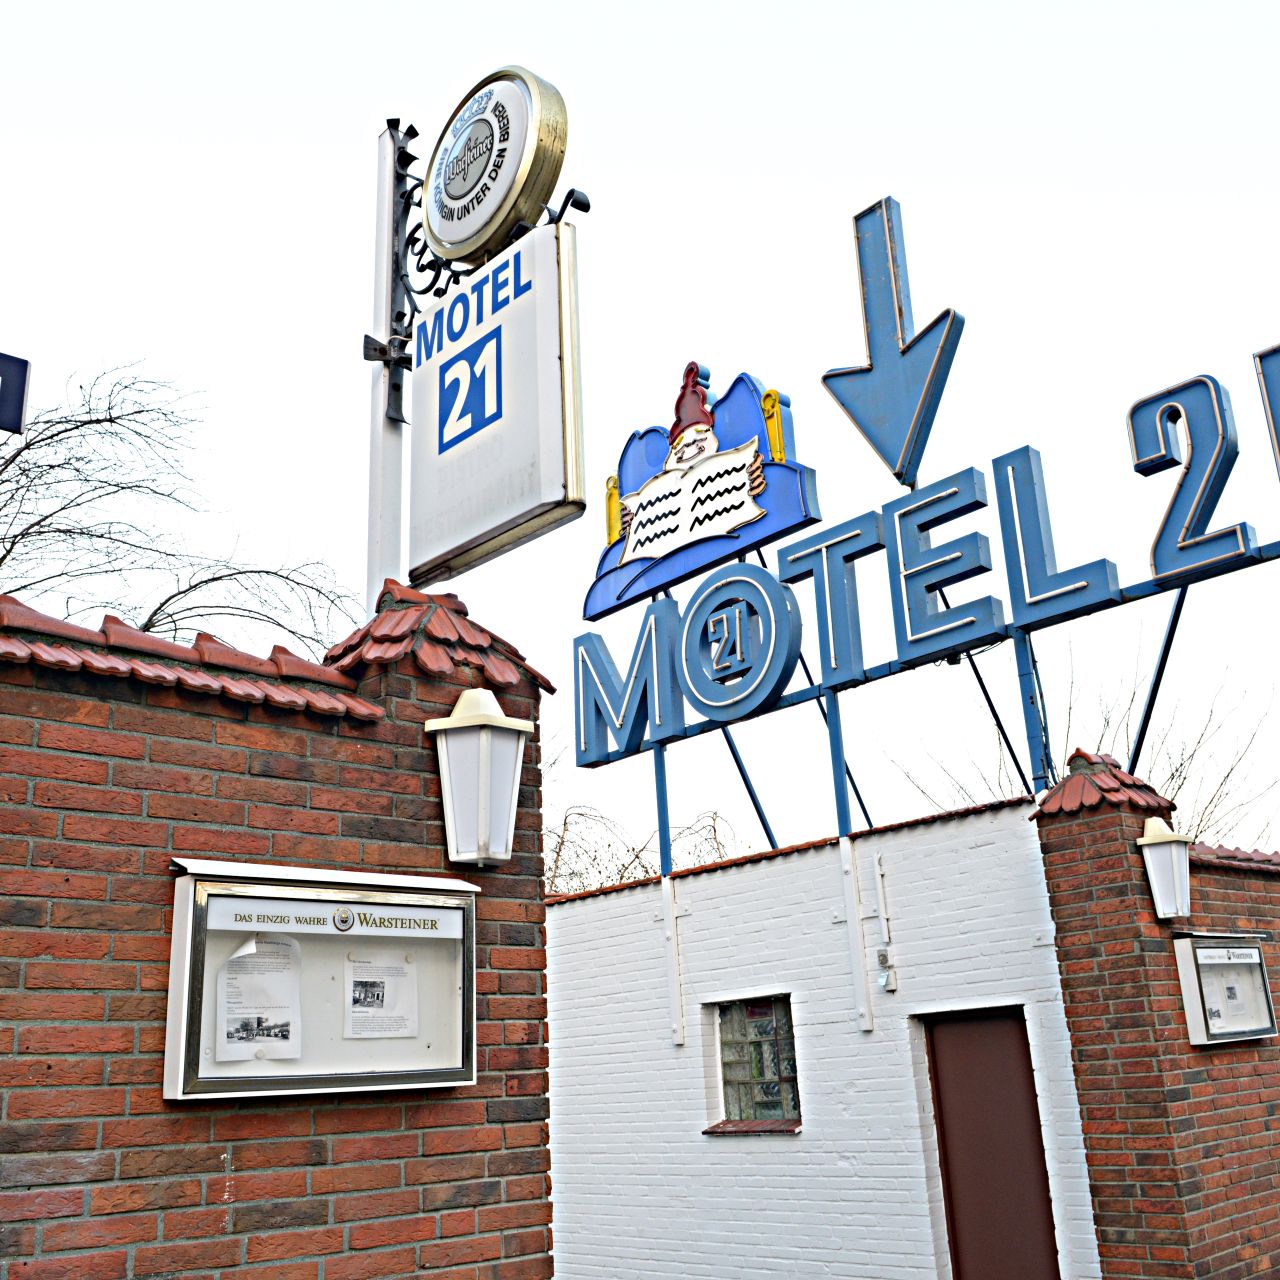 ITM Hotel Motel 21 - Hamburg - Great prices at HOTEL INFO